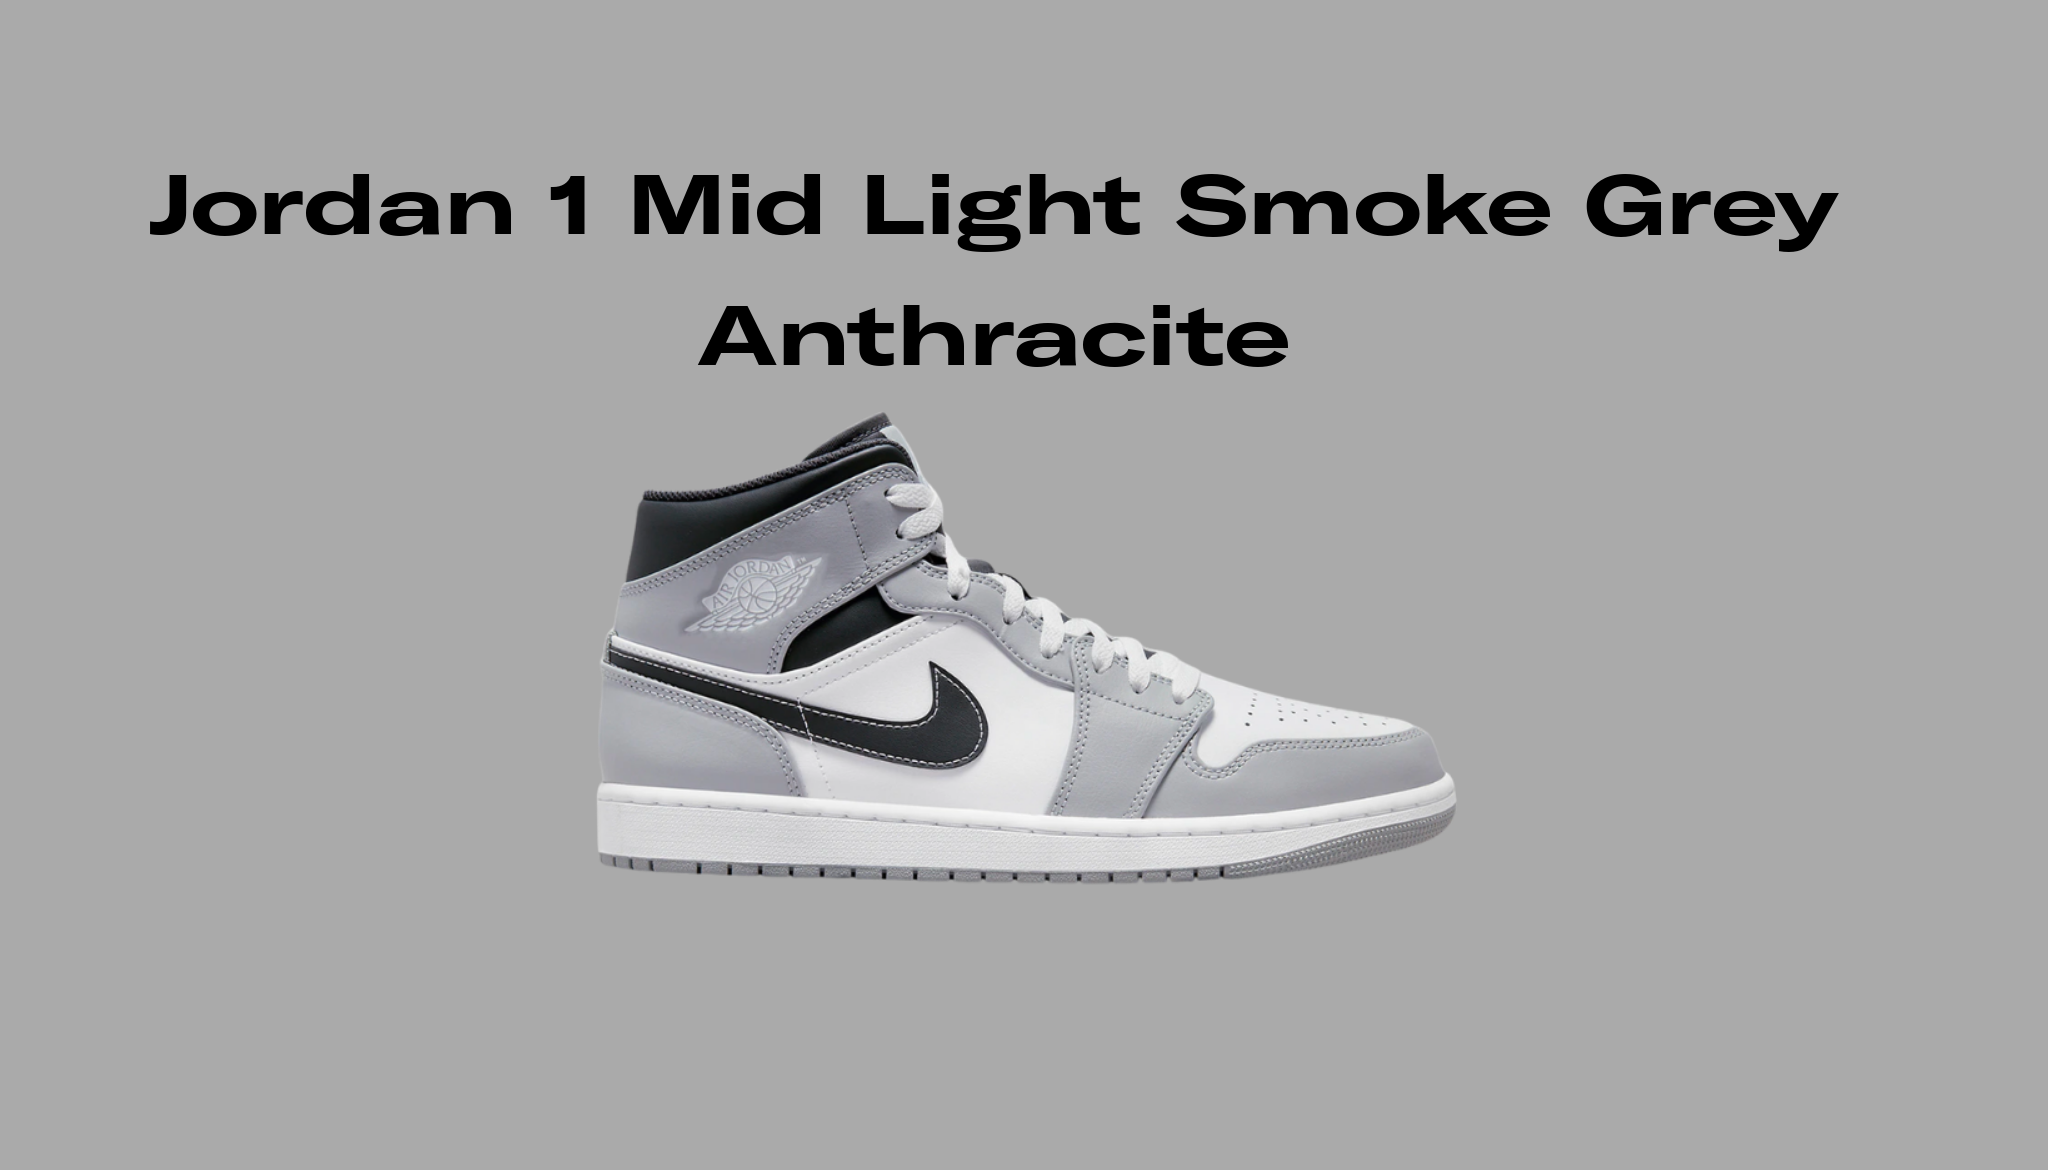 Jordan 1 Mid Light Smoke Grey Anthracite, Raffles and Release Date